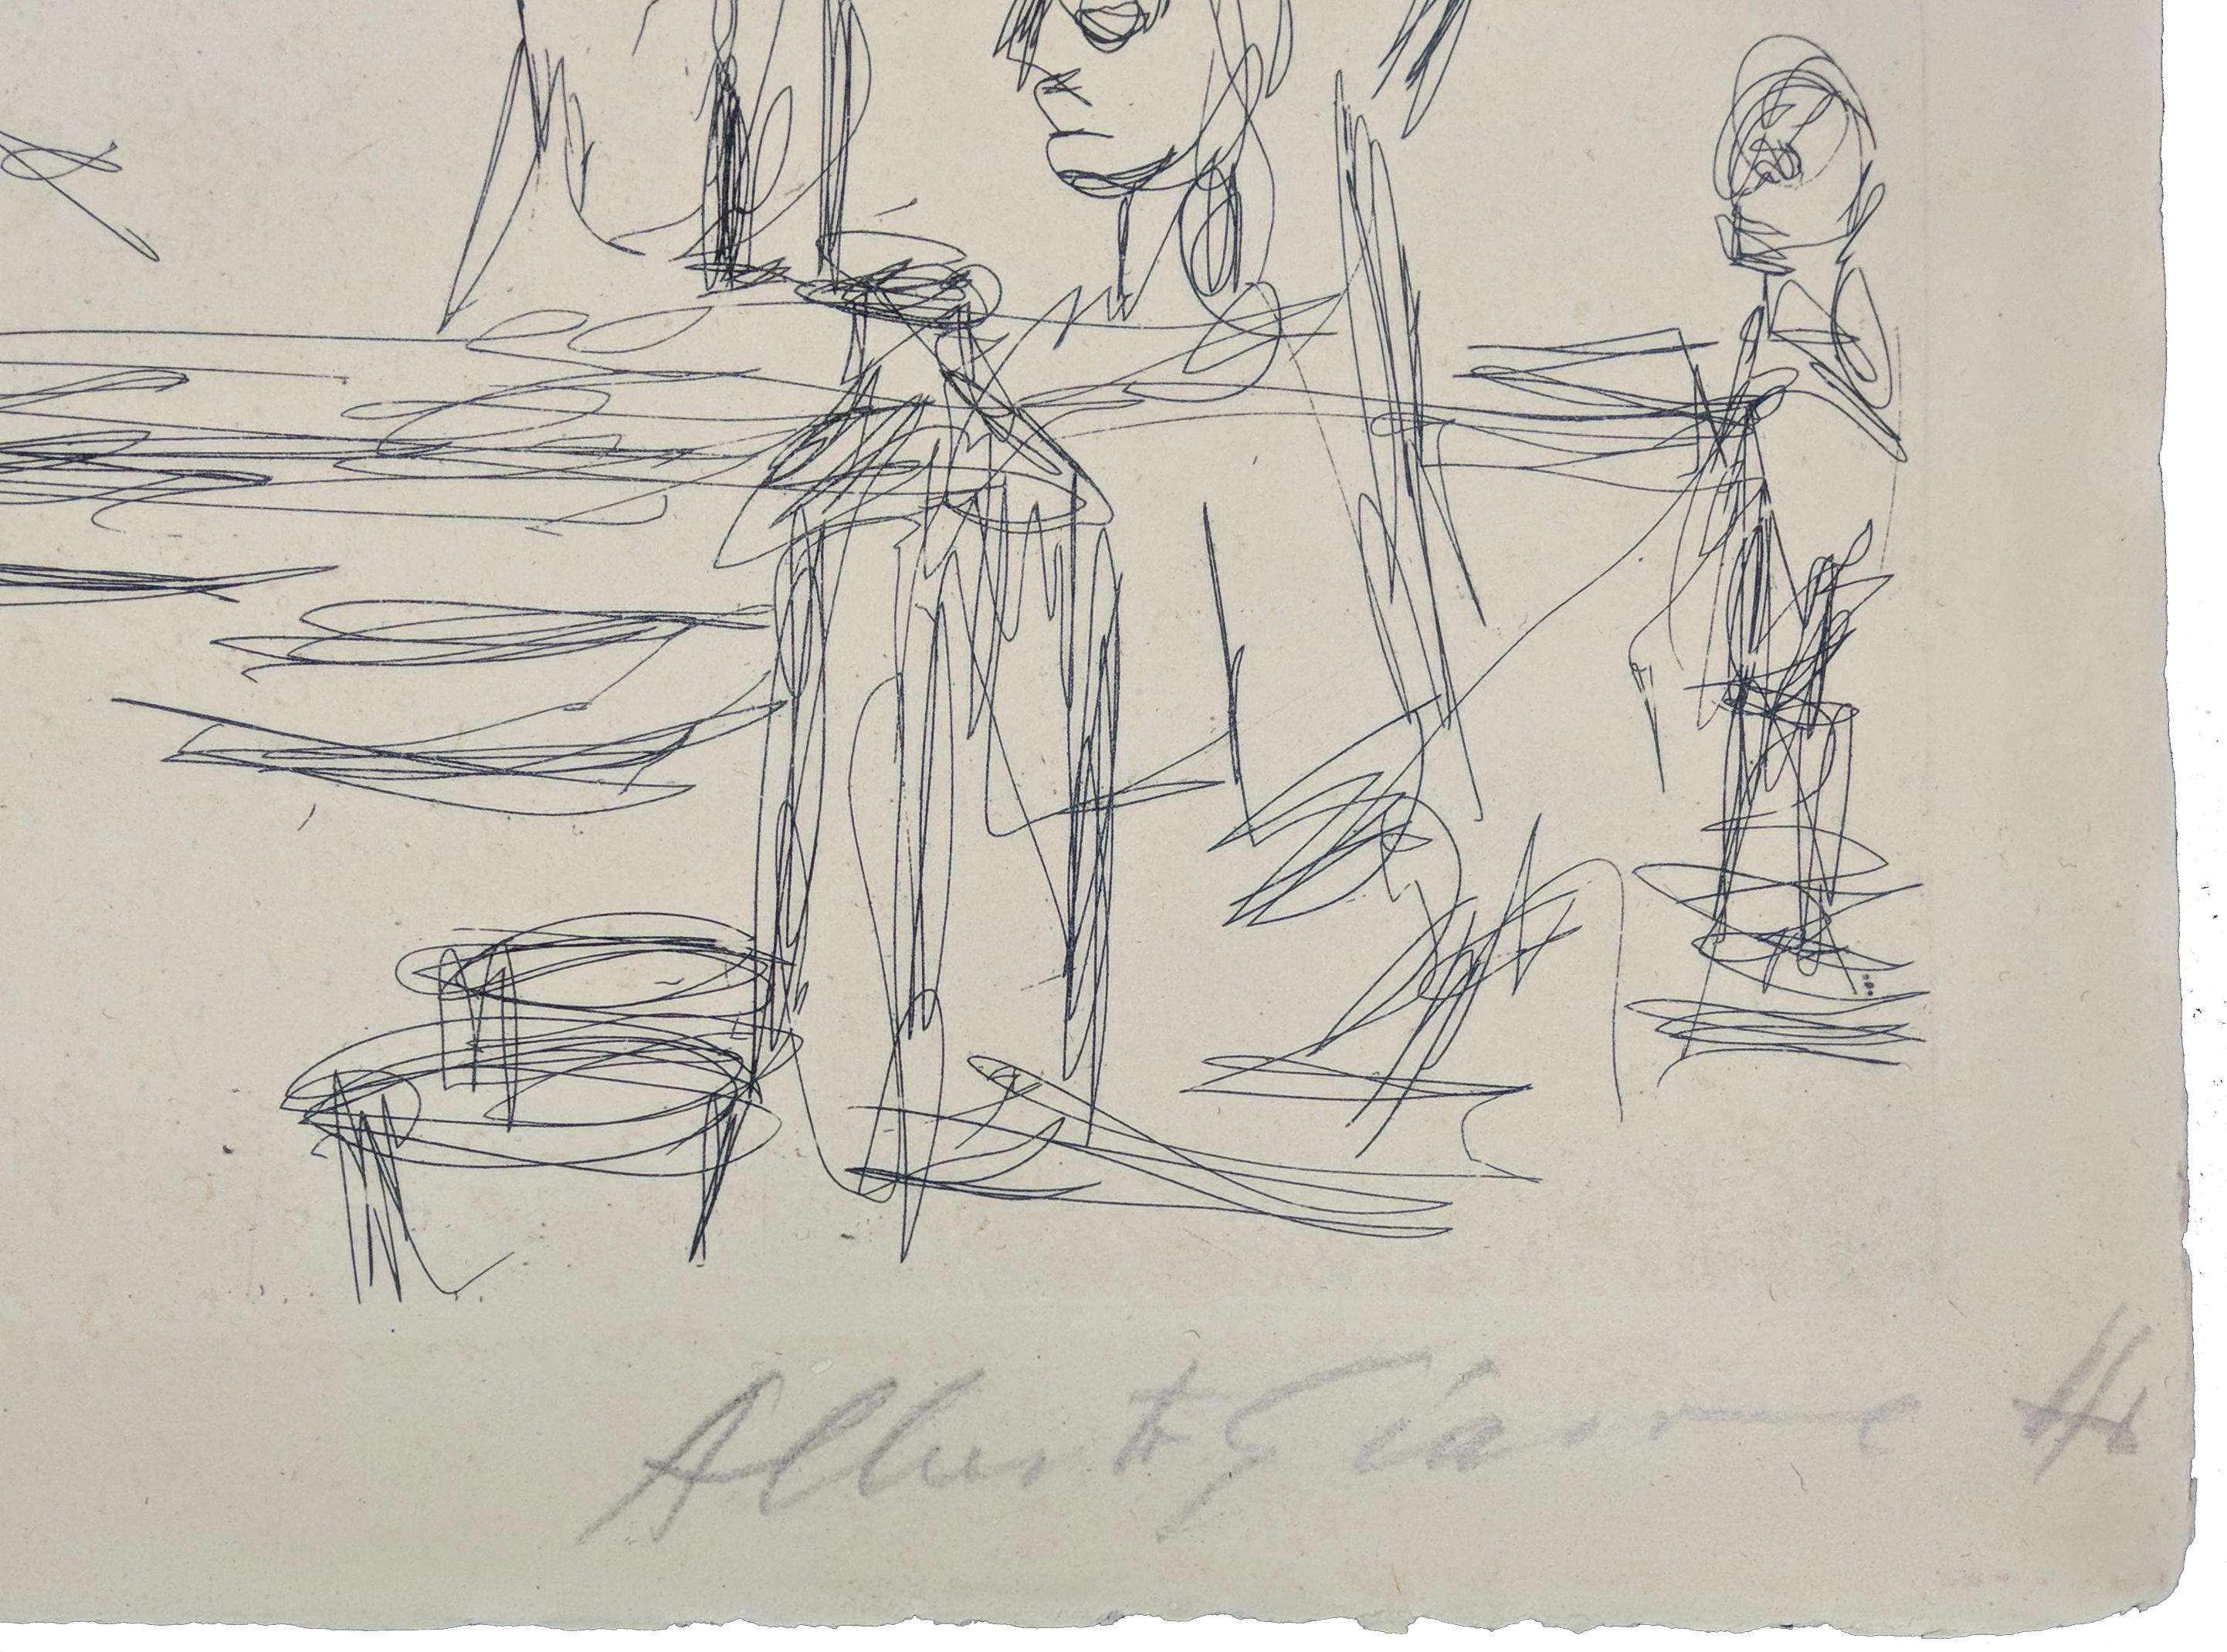 SCULPTURES DANS L'ATELIER - Print by Alberto Giacometti